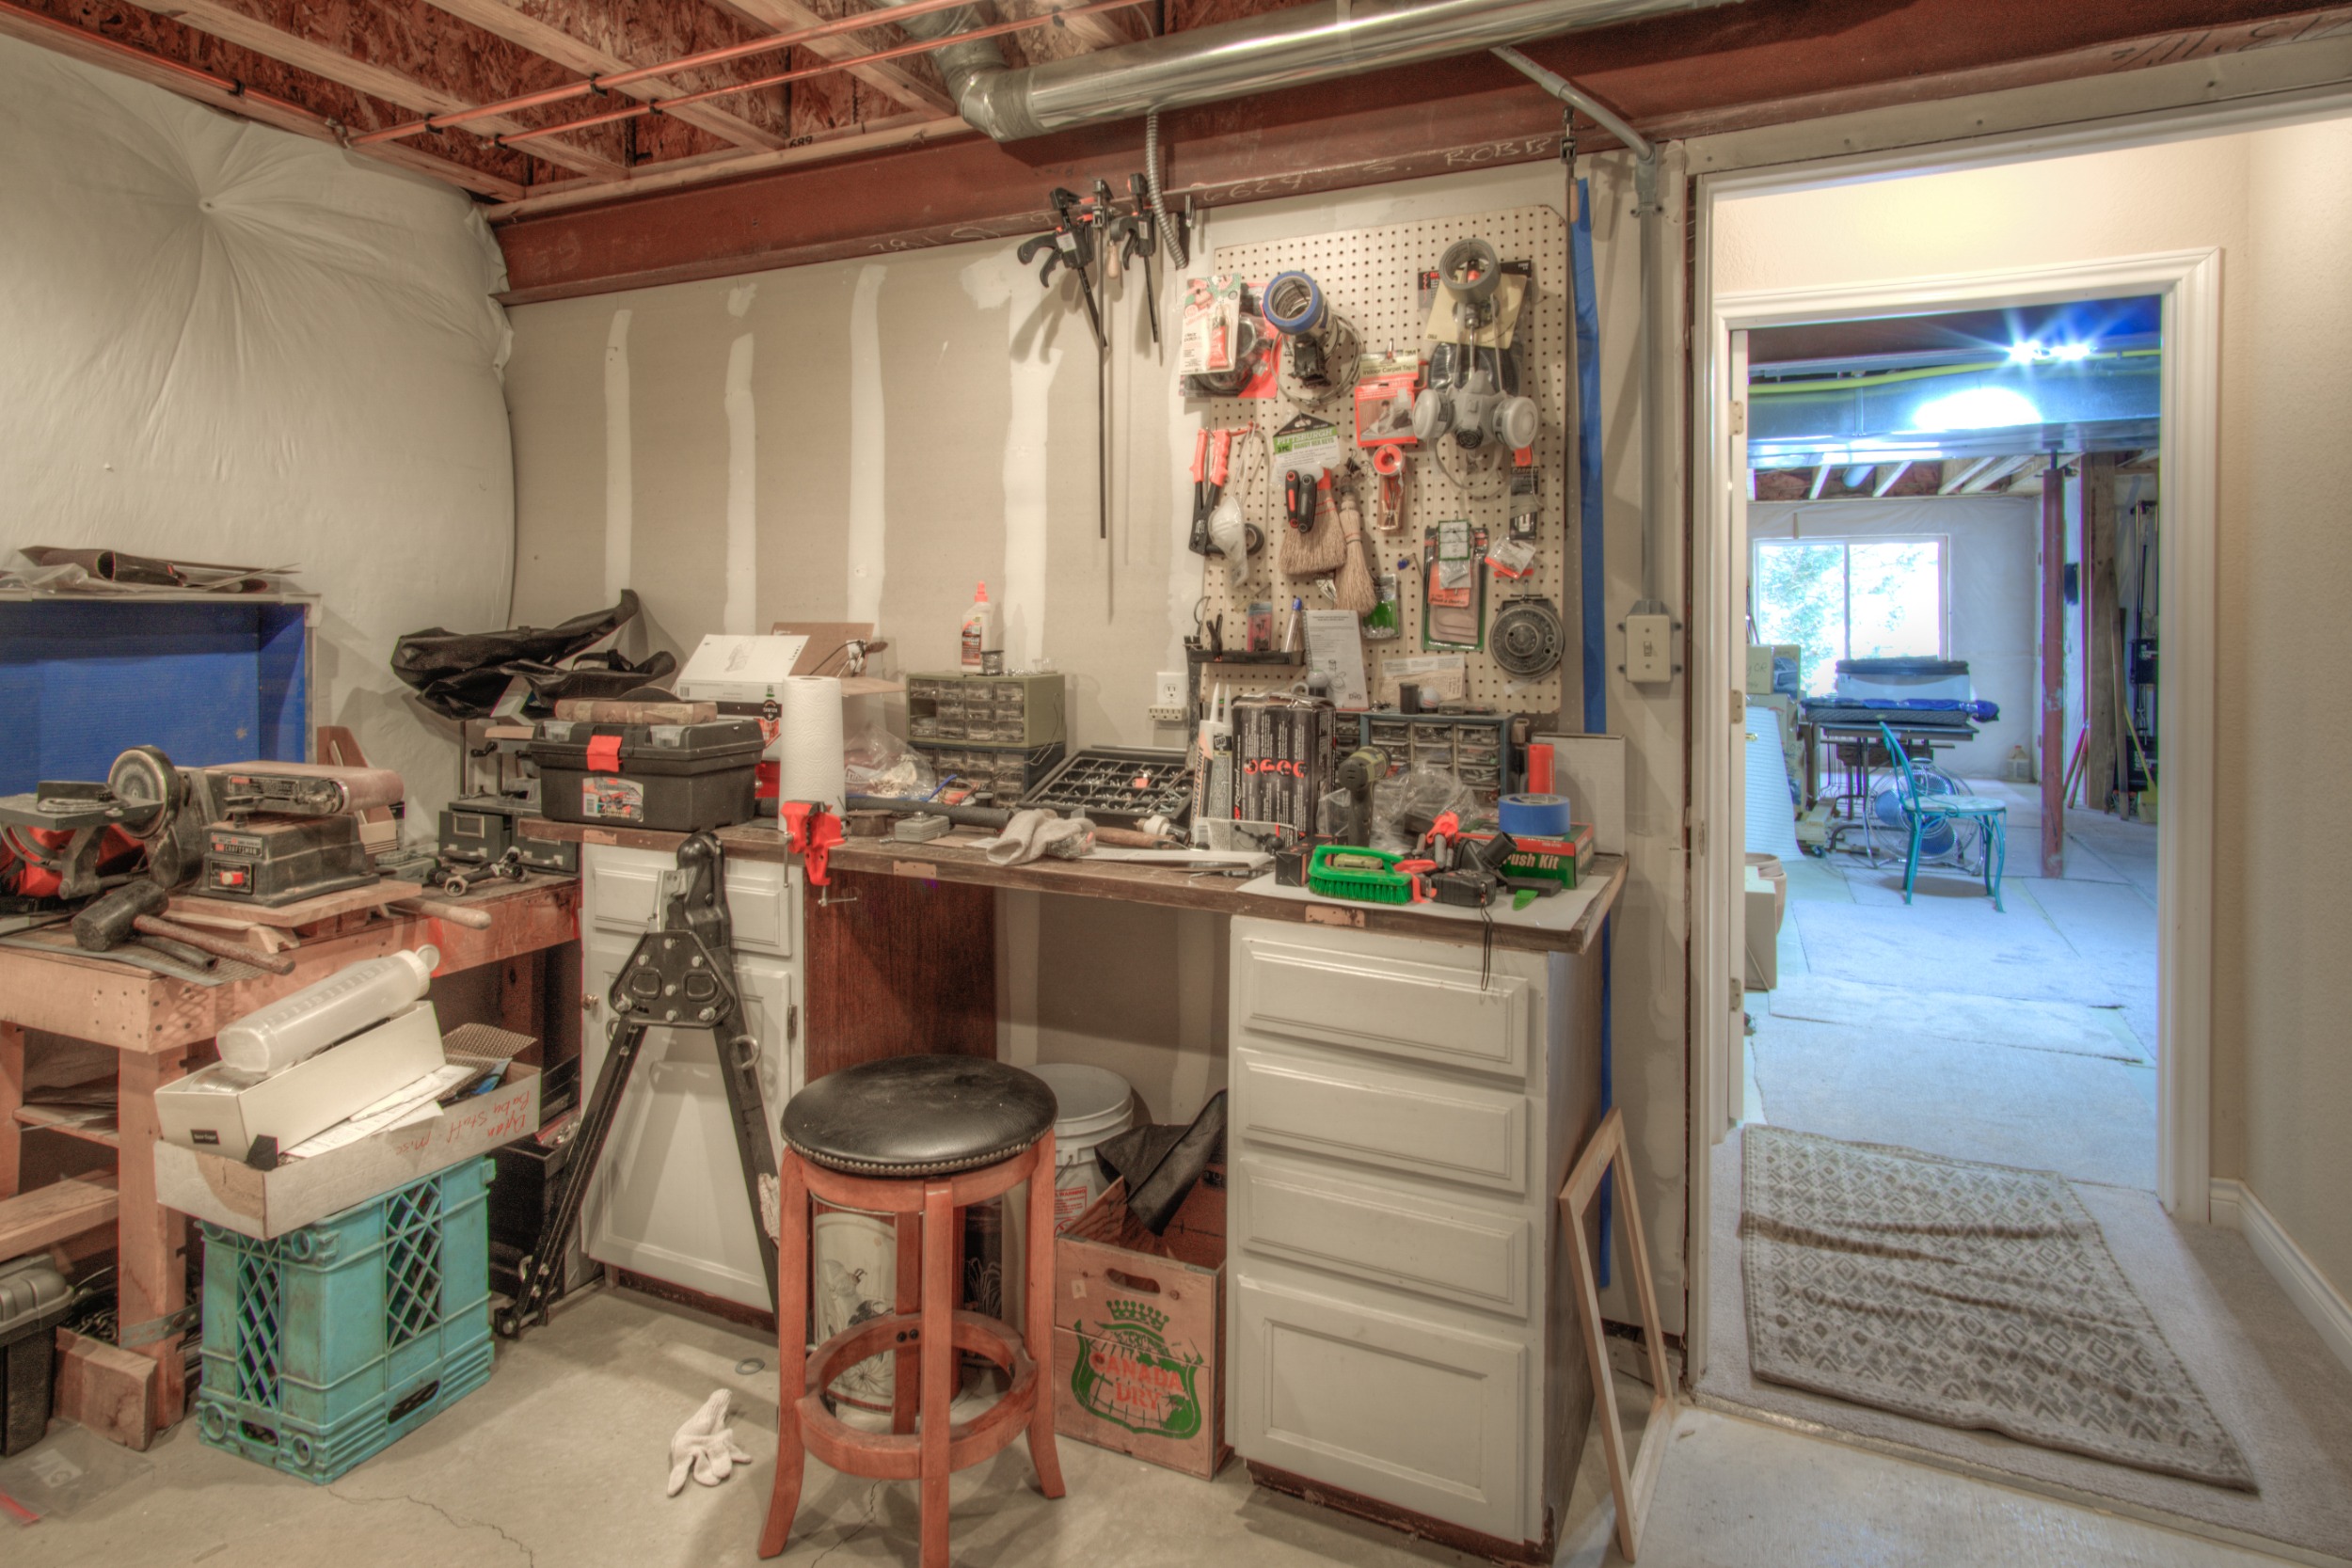 Workshop area in unfinished basement